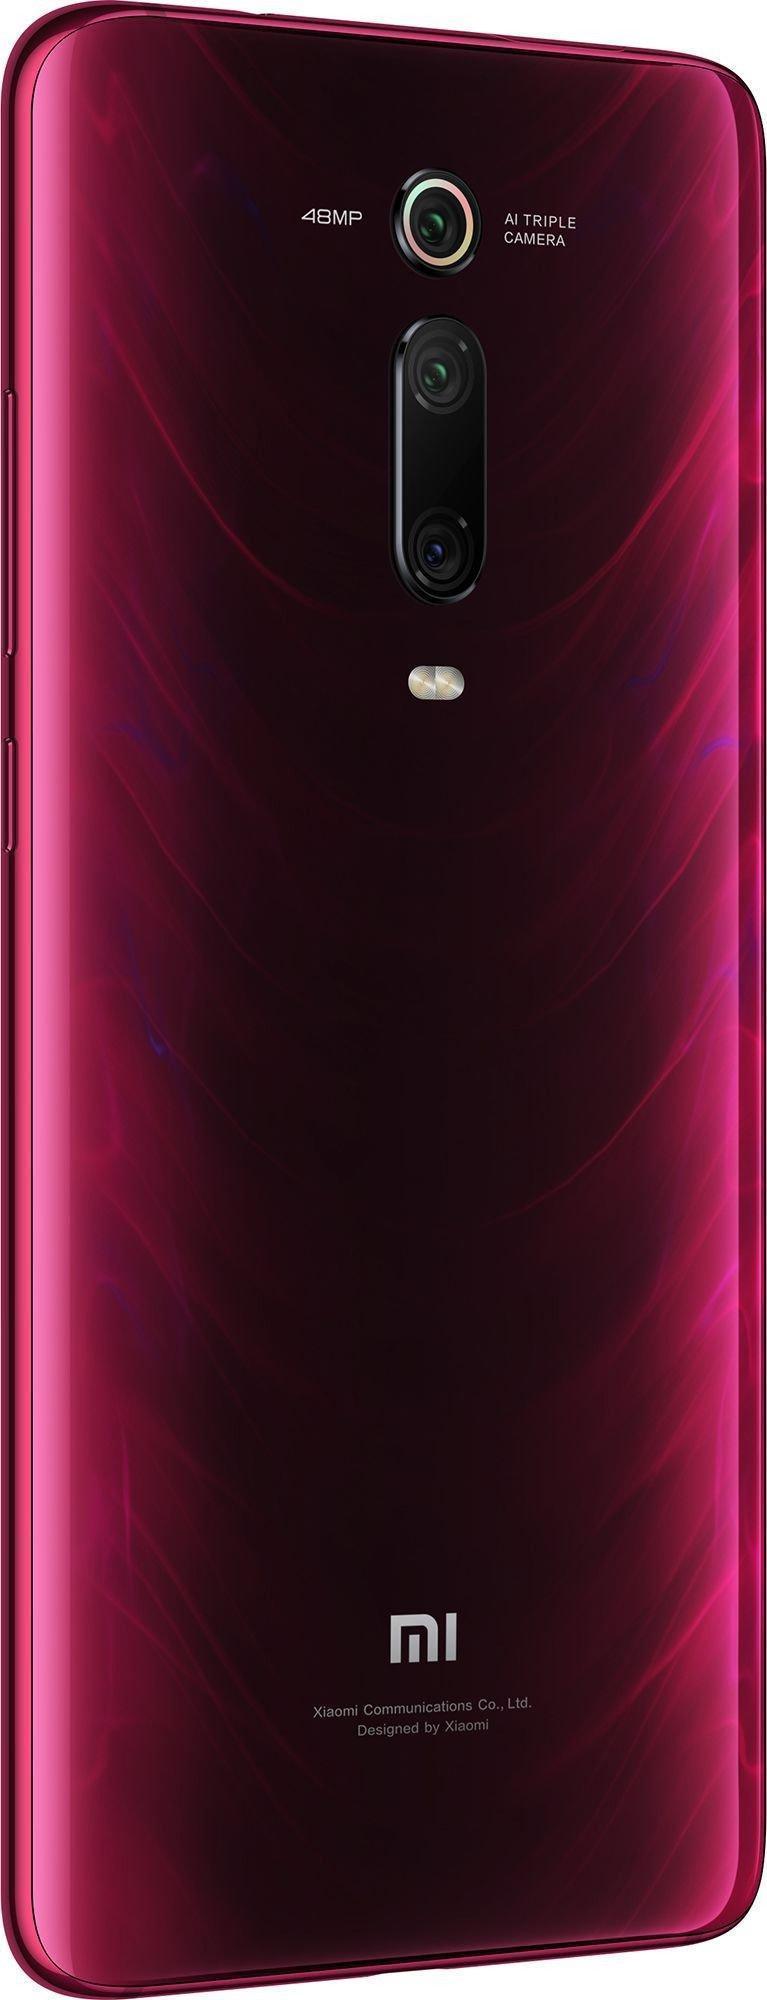 Купить Смартфон Xiaomi Mi 9T (Redmi K20) 6/64Gb Flame Red